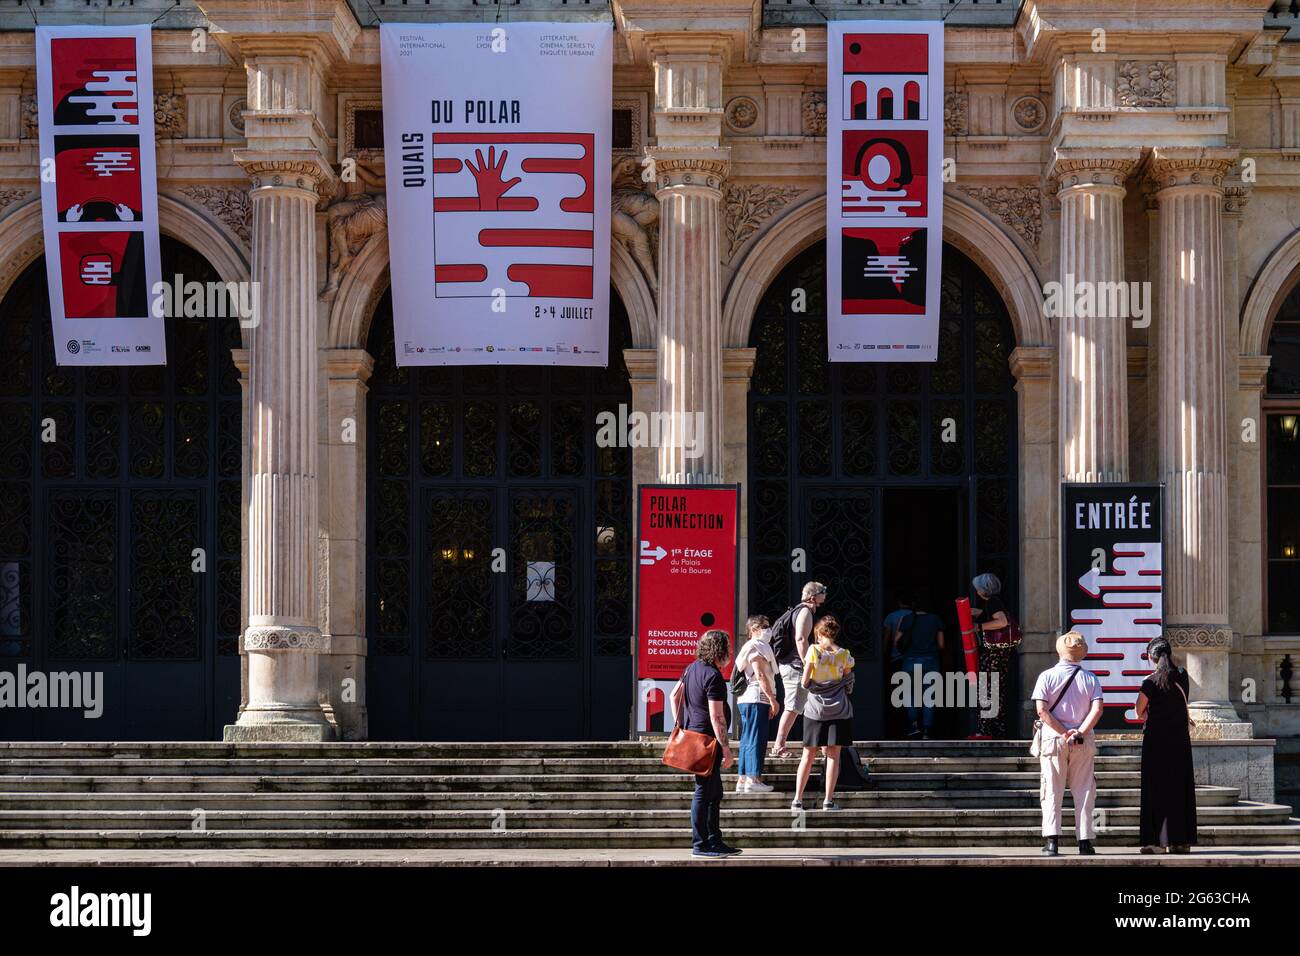 Lyon (France), July 02, 2021. 17th edition of the quais du polar from 02 to 04 July. Public entrance at the Palais de la Bourse. Stock Photo